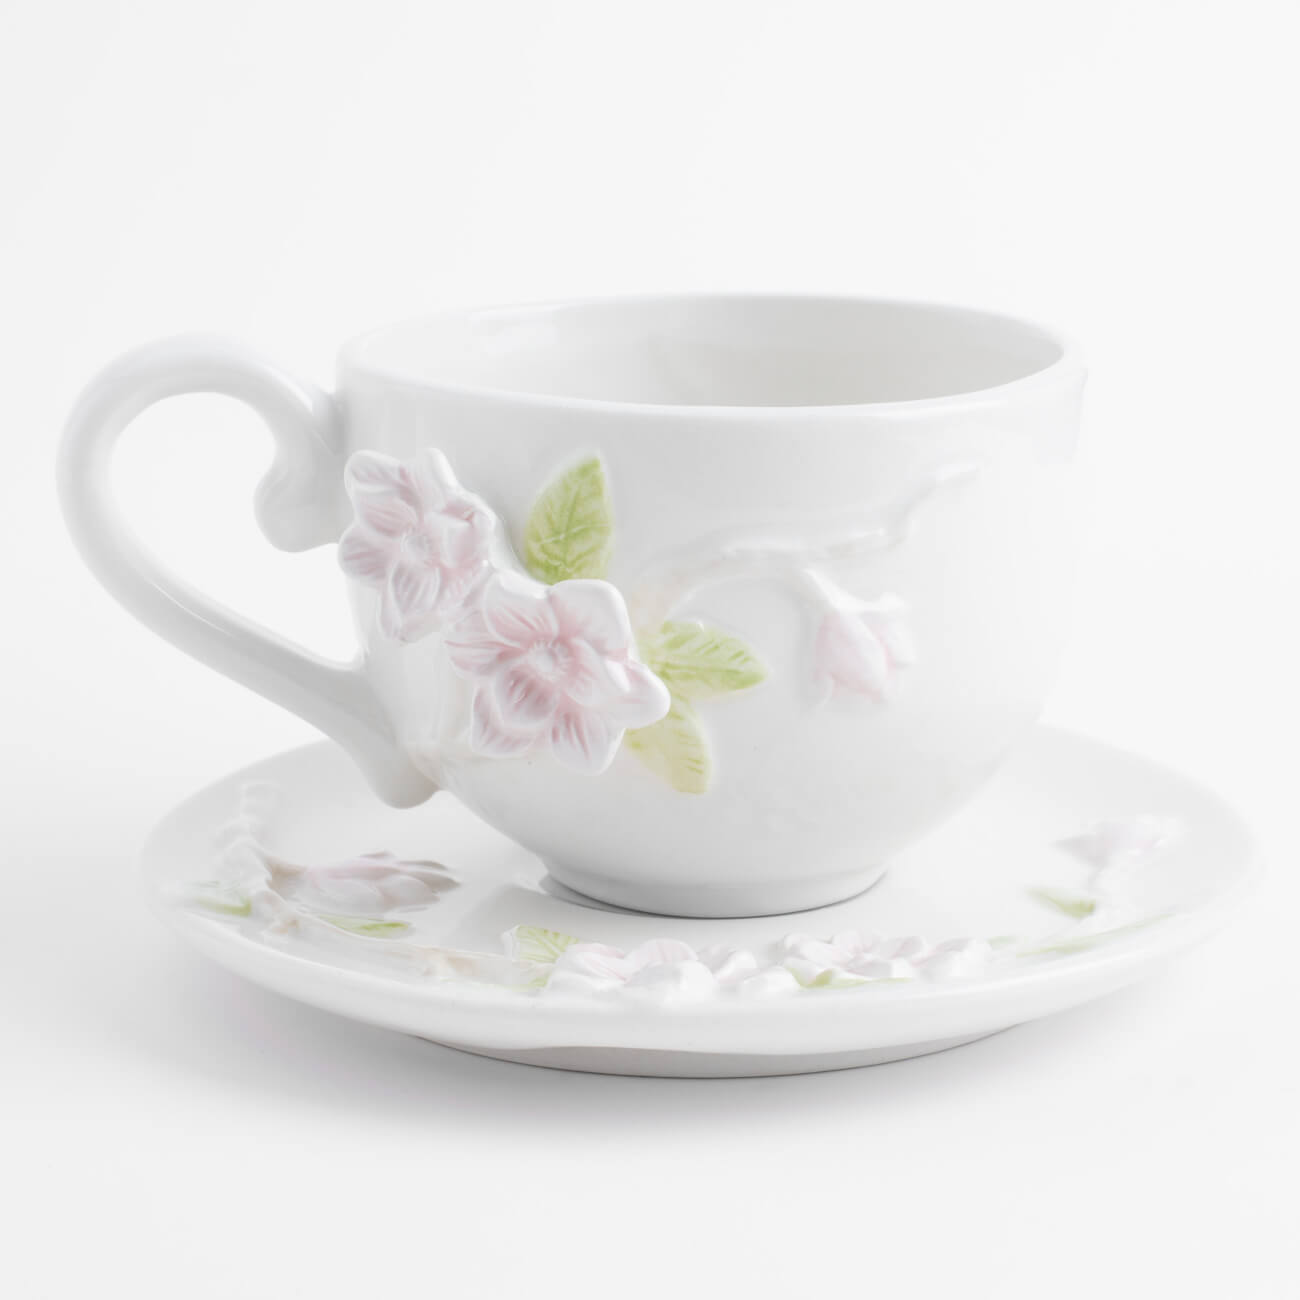 Пара чайная для завтрака, 1 перс, 2 пр, 420 мл, керамика, молочная, Цветы магнолии, Magnolia пара чайная 1 перс 2 пр 320 мл керамика черная поцелуй baise